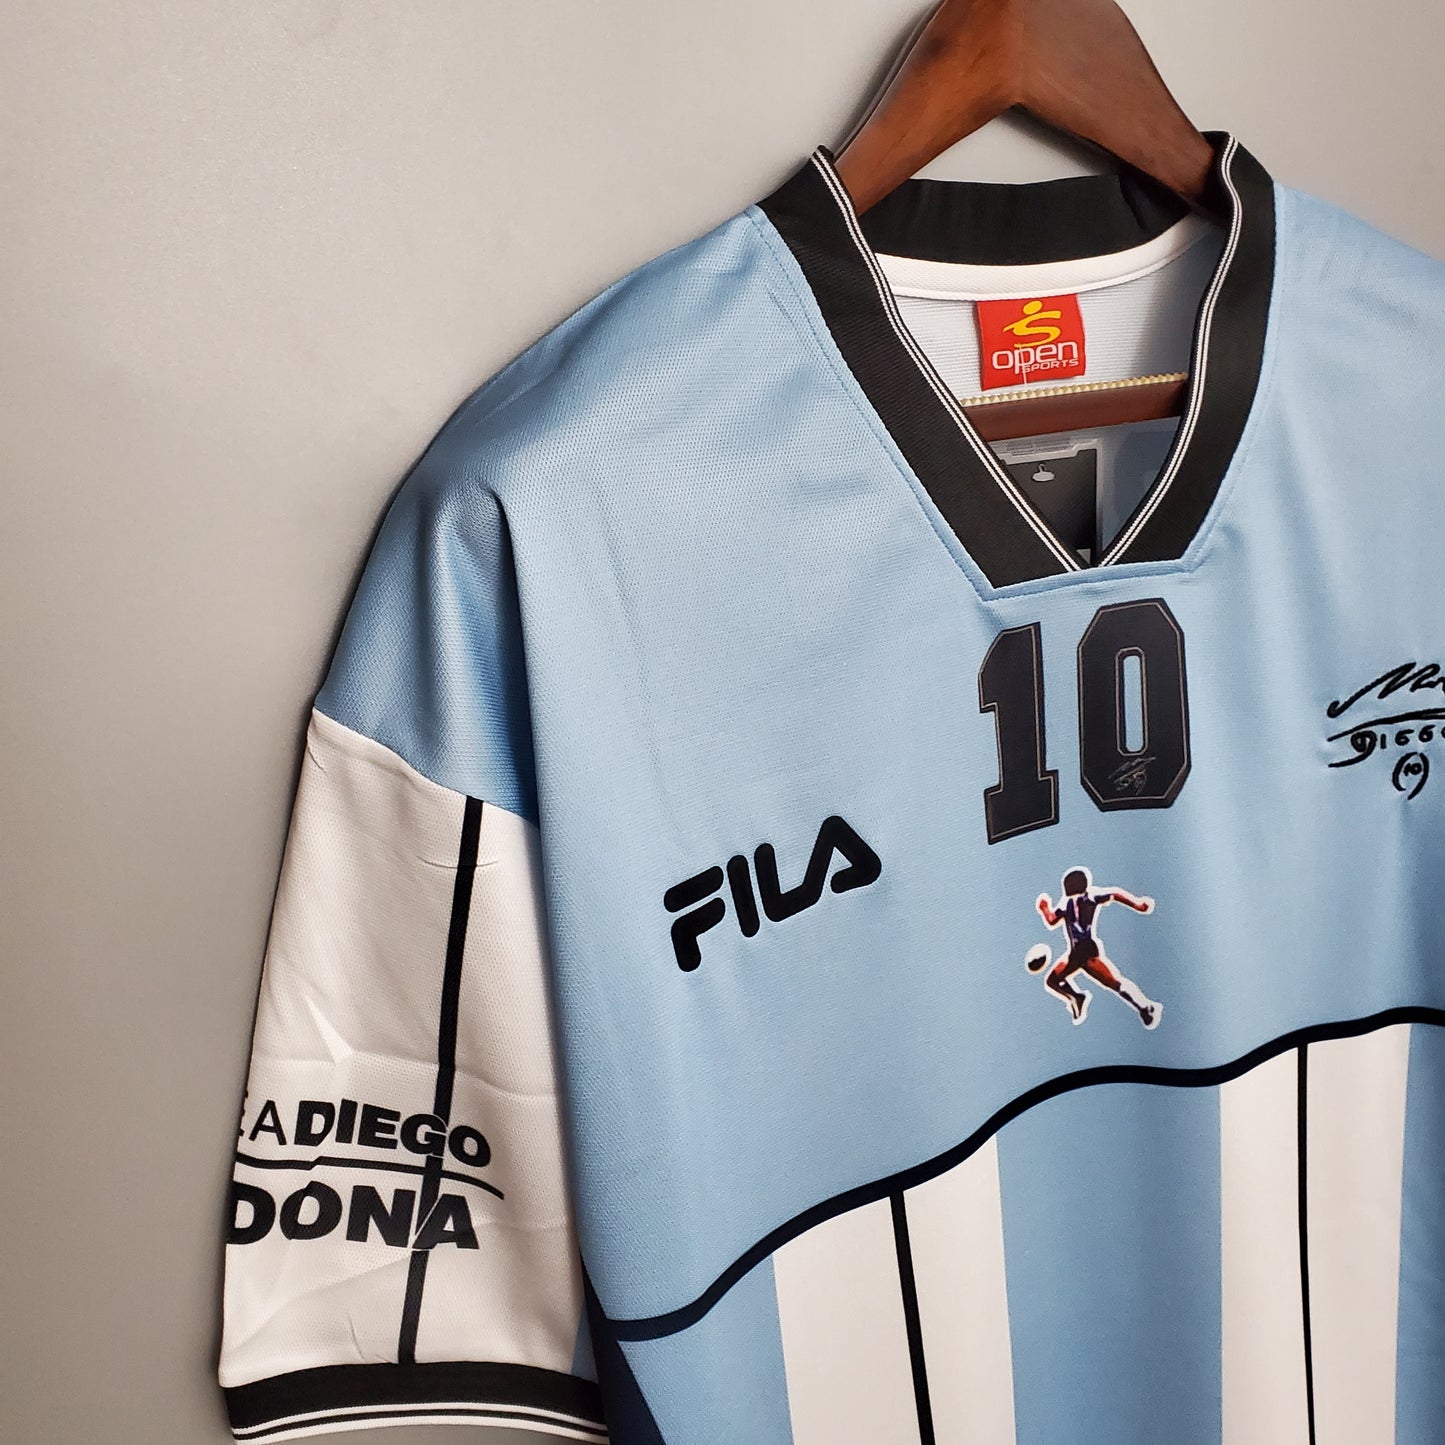 Argentina Jersey 2001 - Commemorative Edition Maradona